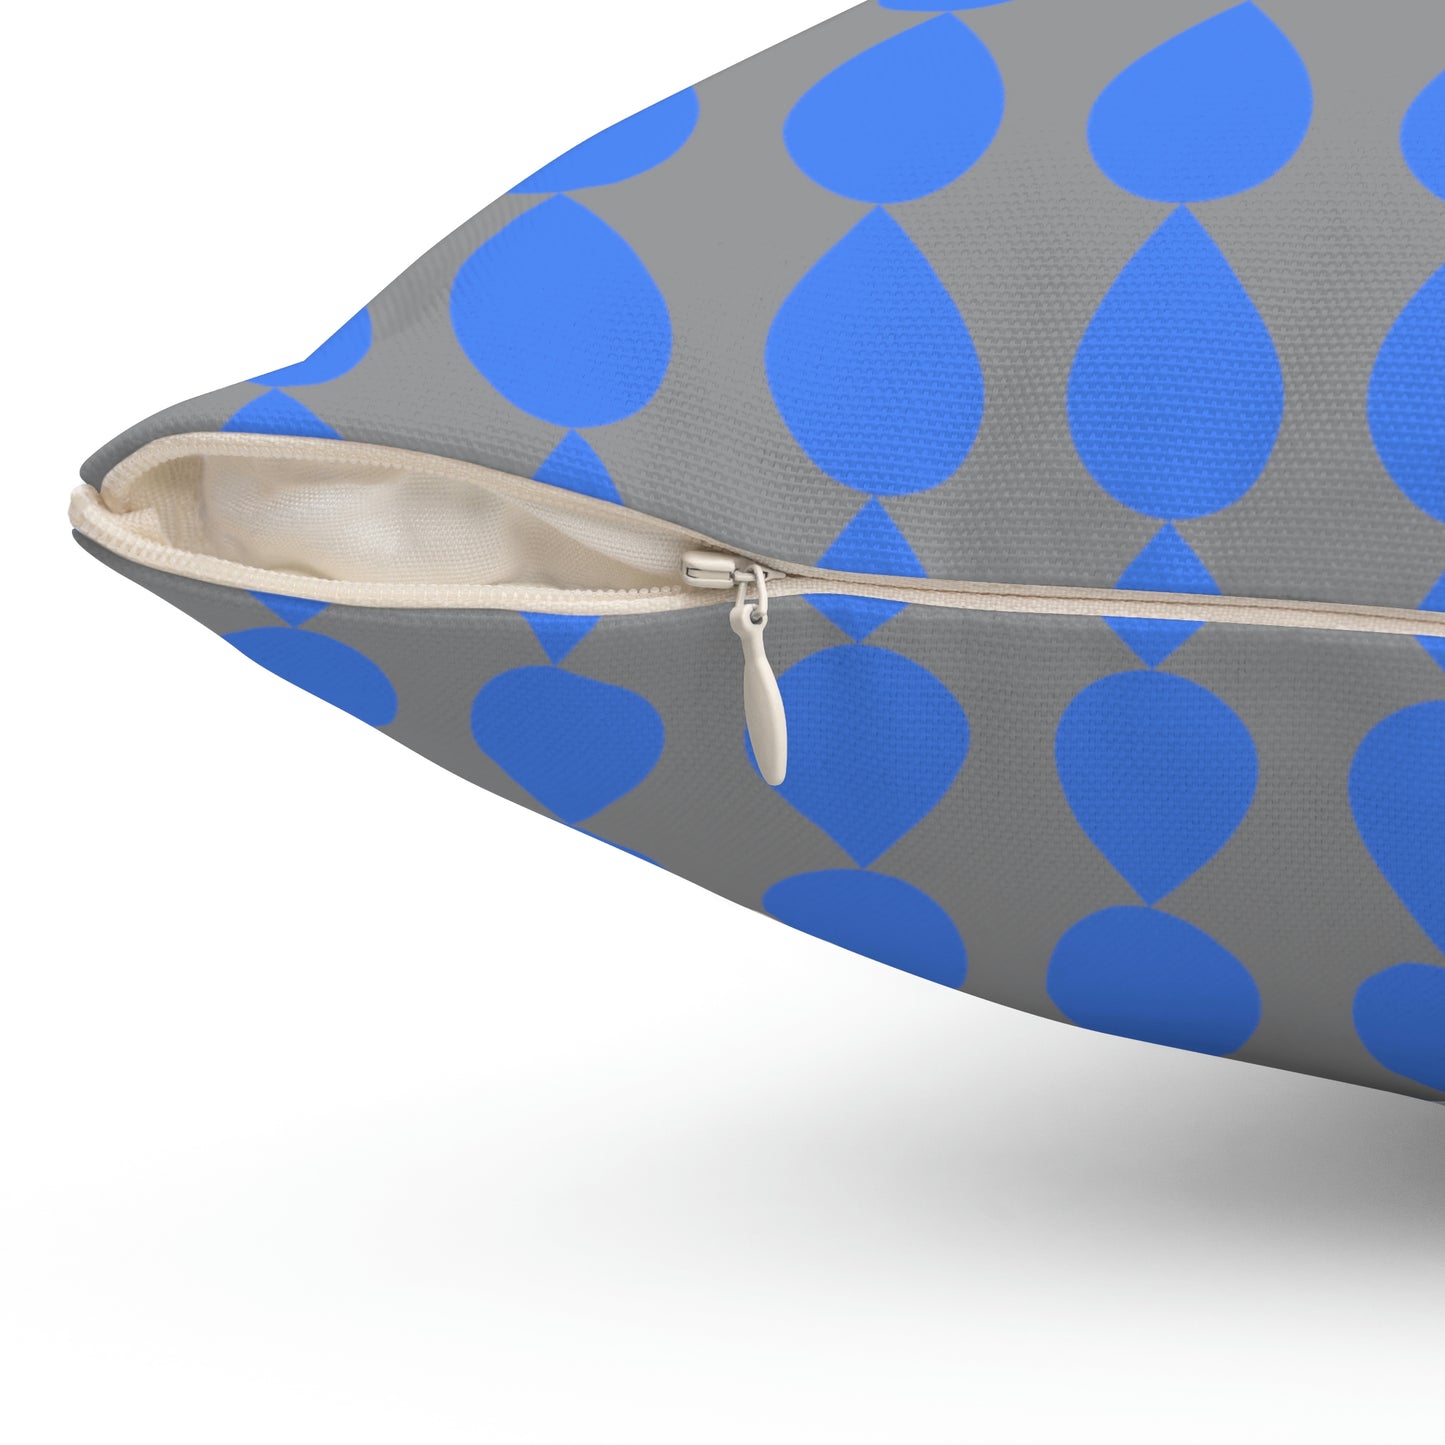 Spun Polyester Square Pillow Case ”Water Drop on Gray”